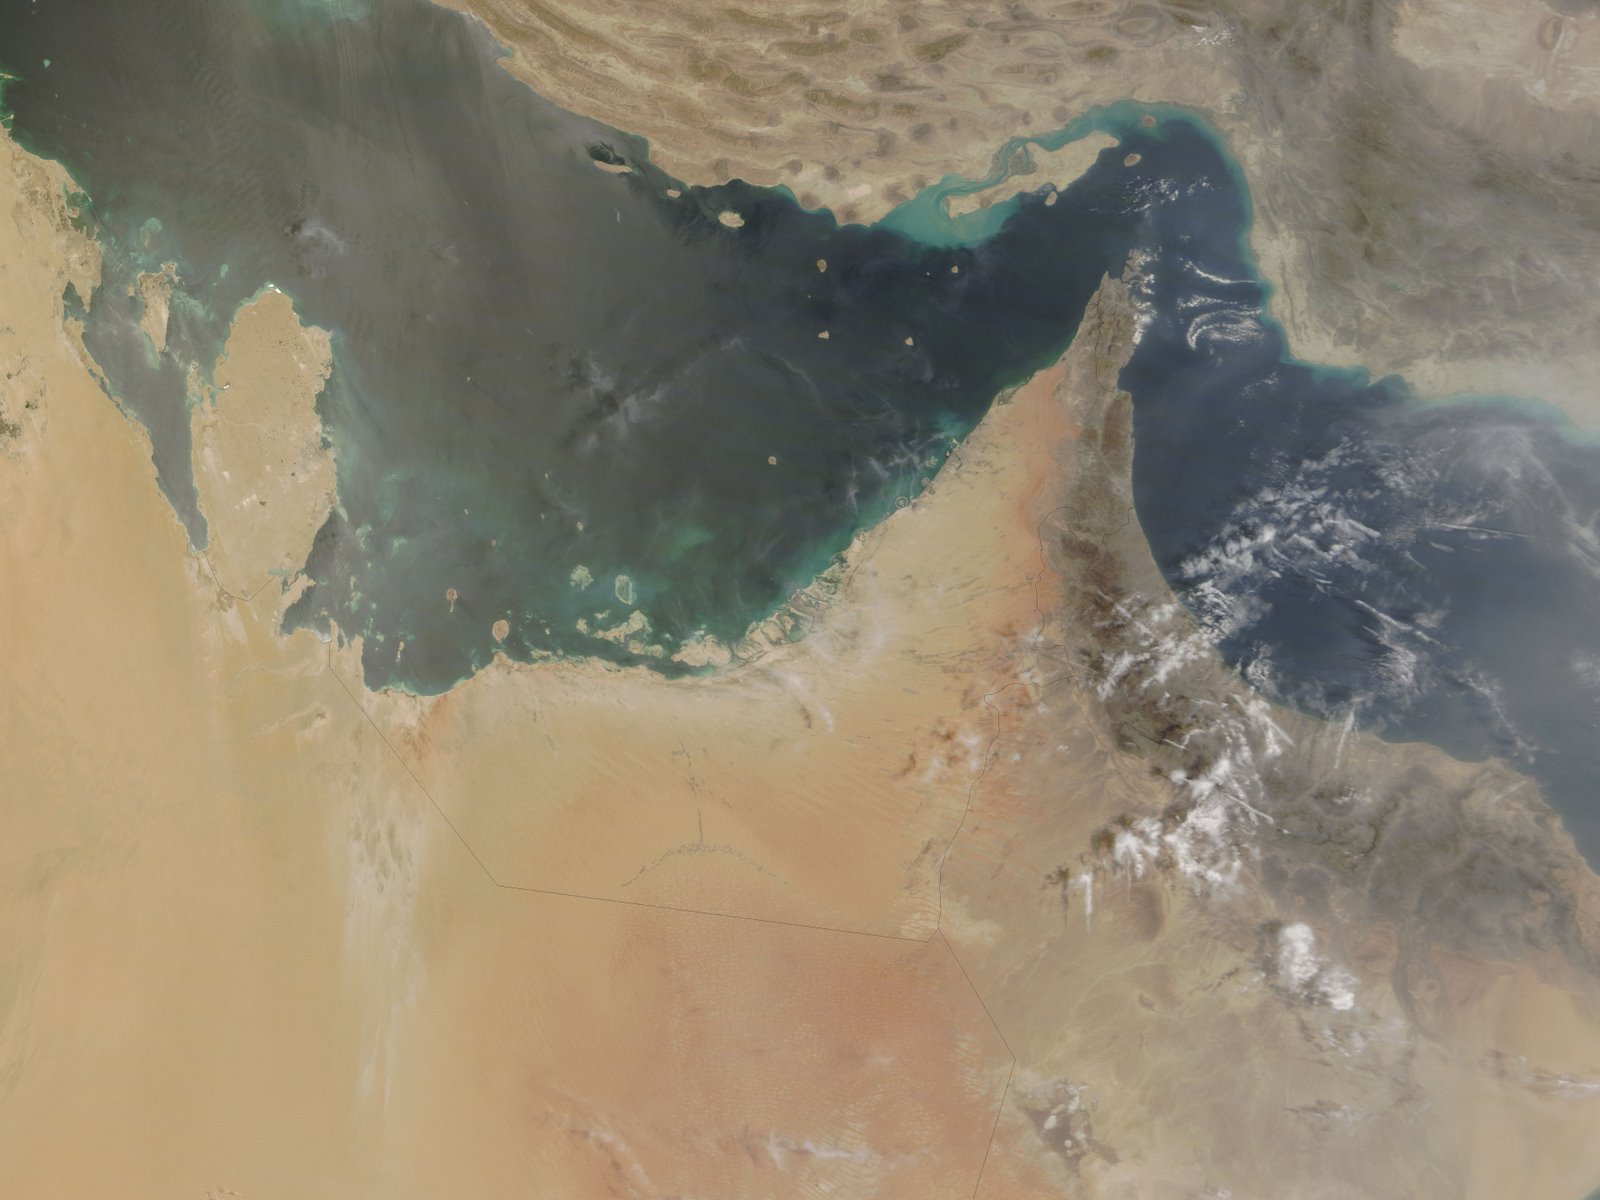 [AERONET_Dhabi.2007187.terra.250m.jpg]